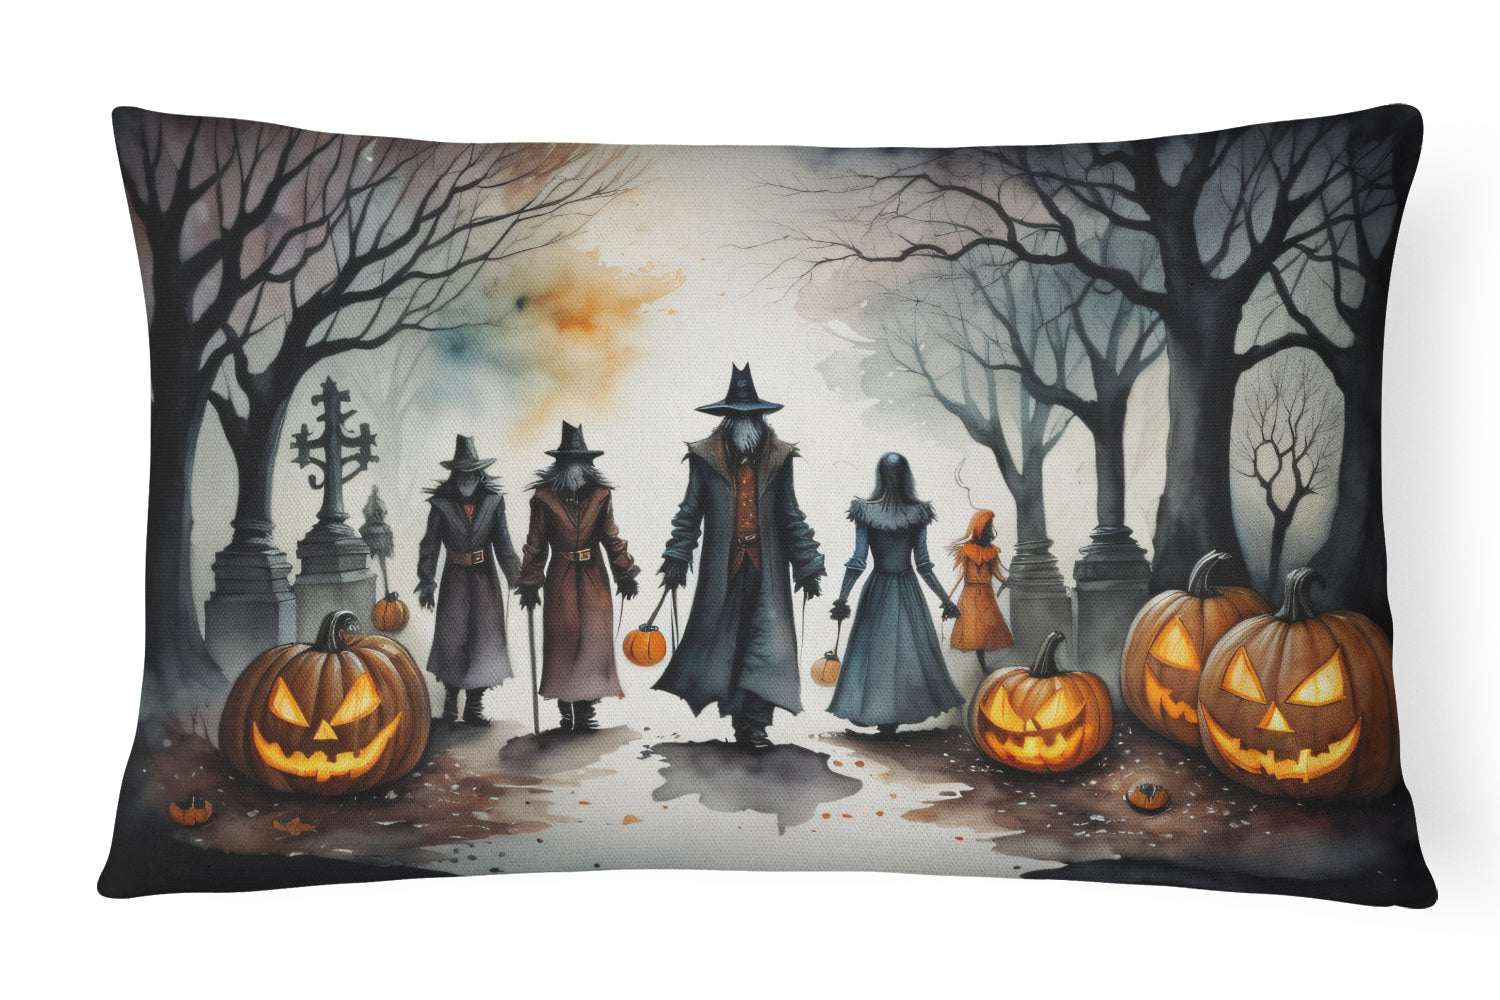 Buy this Vampires Spooky Halloween Fabric Decorative Pillow